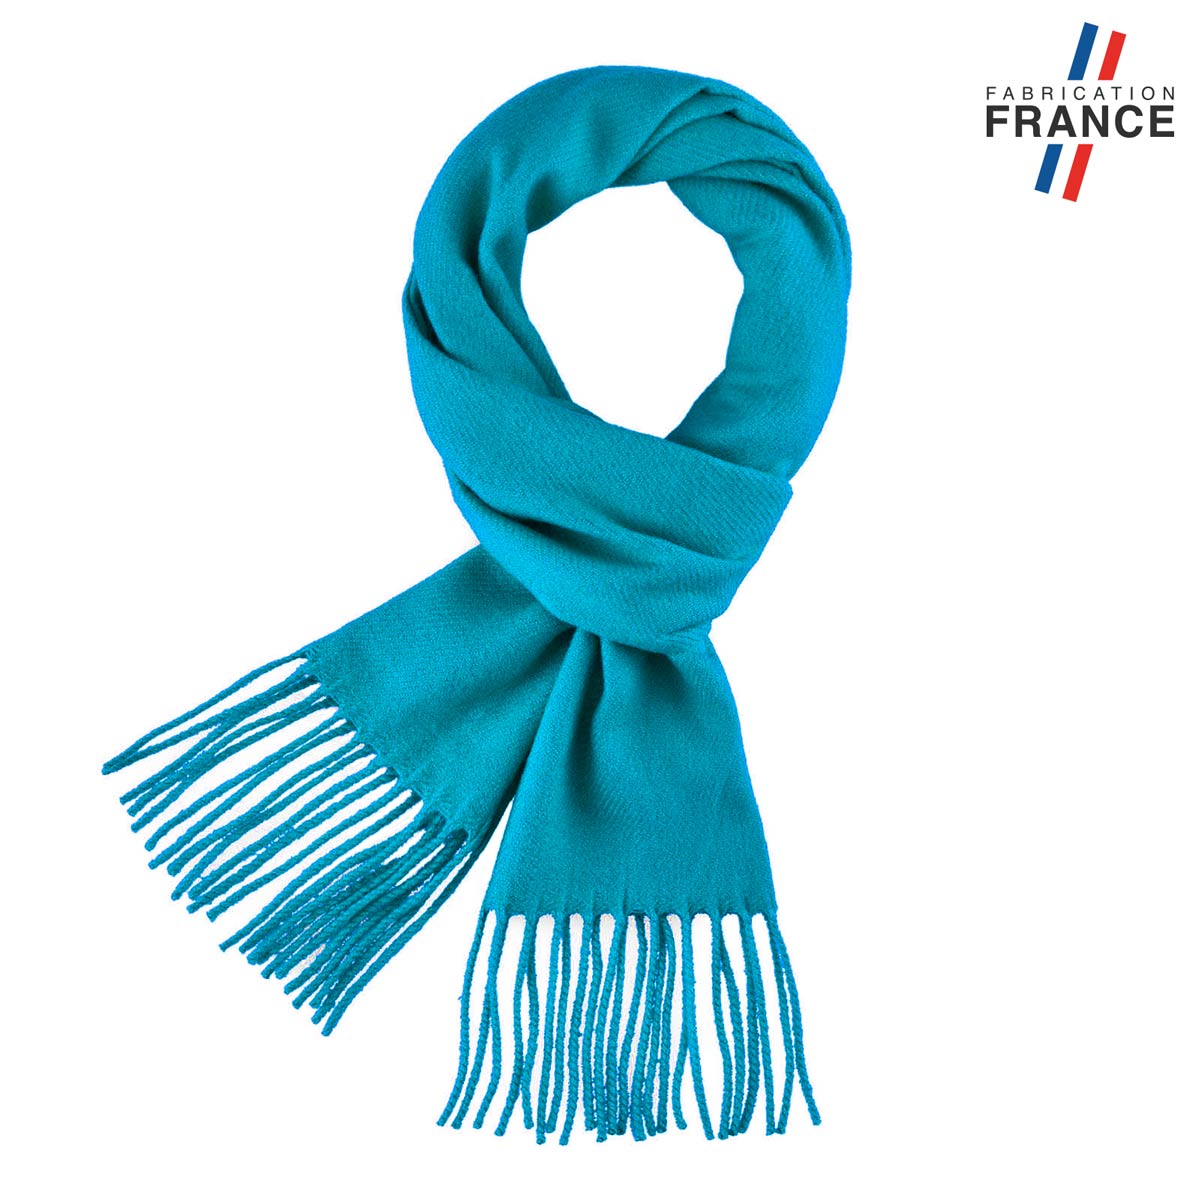 Echarpe-franges-bleu-turquoise-fabrication-francaise--AT-06583_F12-1FR